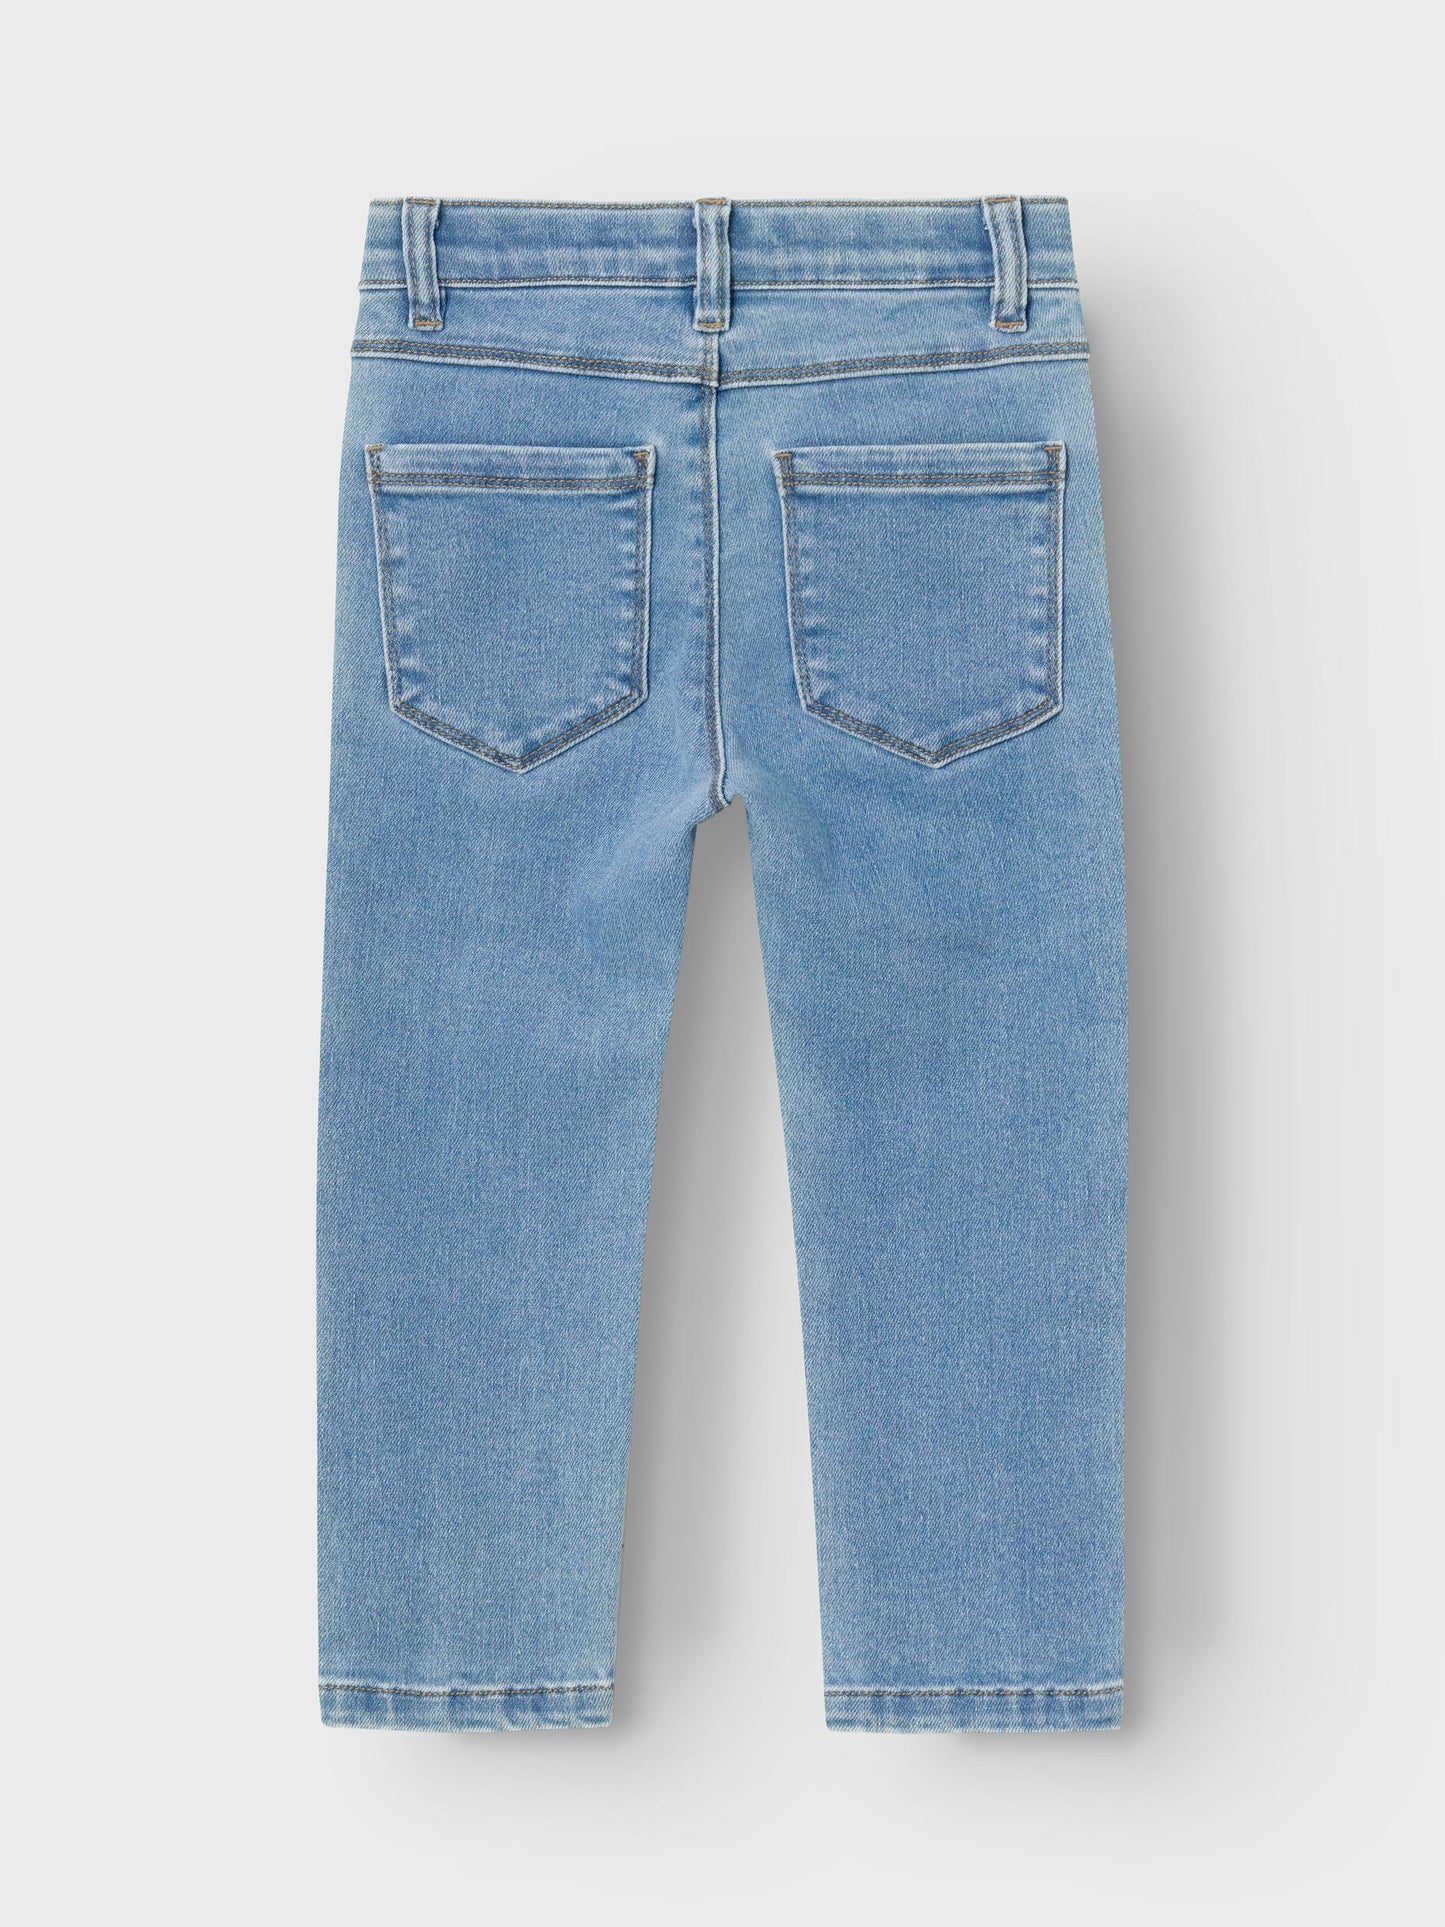 Lil atelier - Jeans - medium blue denim